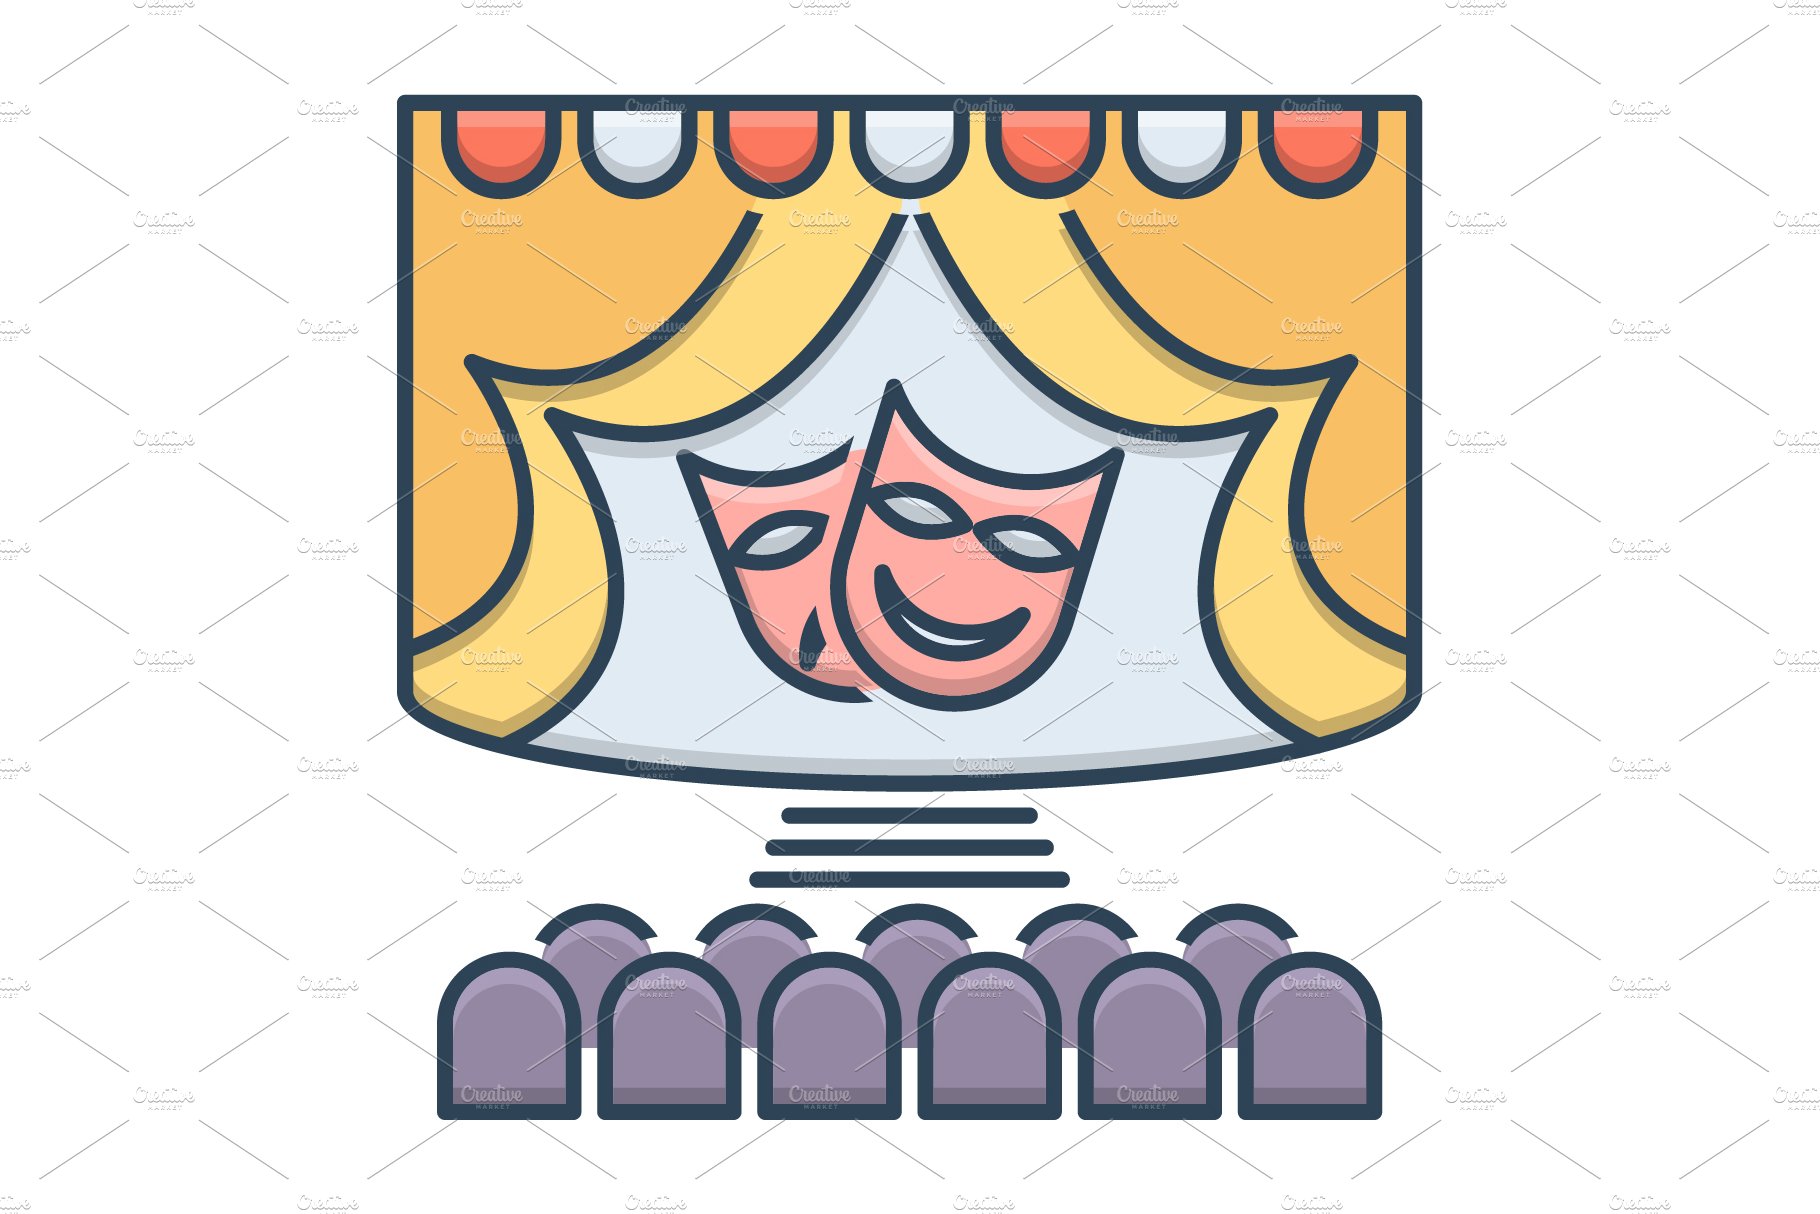 Theatre stage icon cover image.